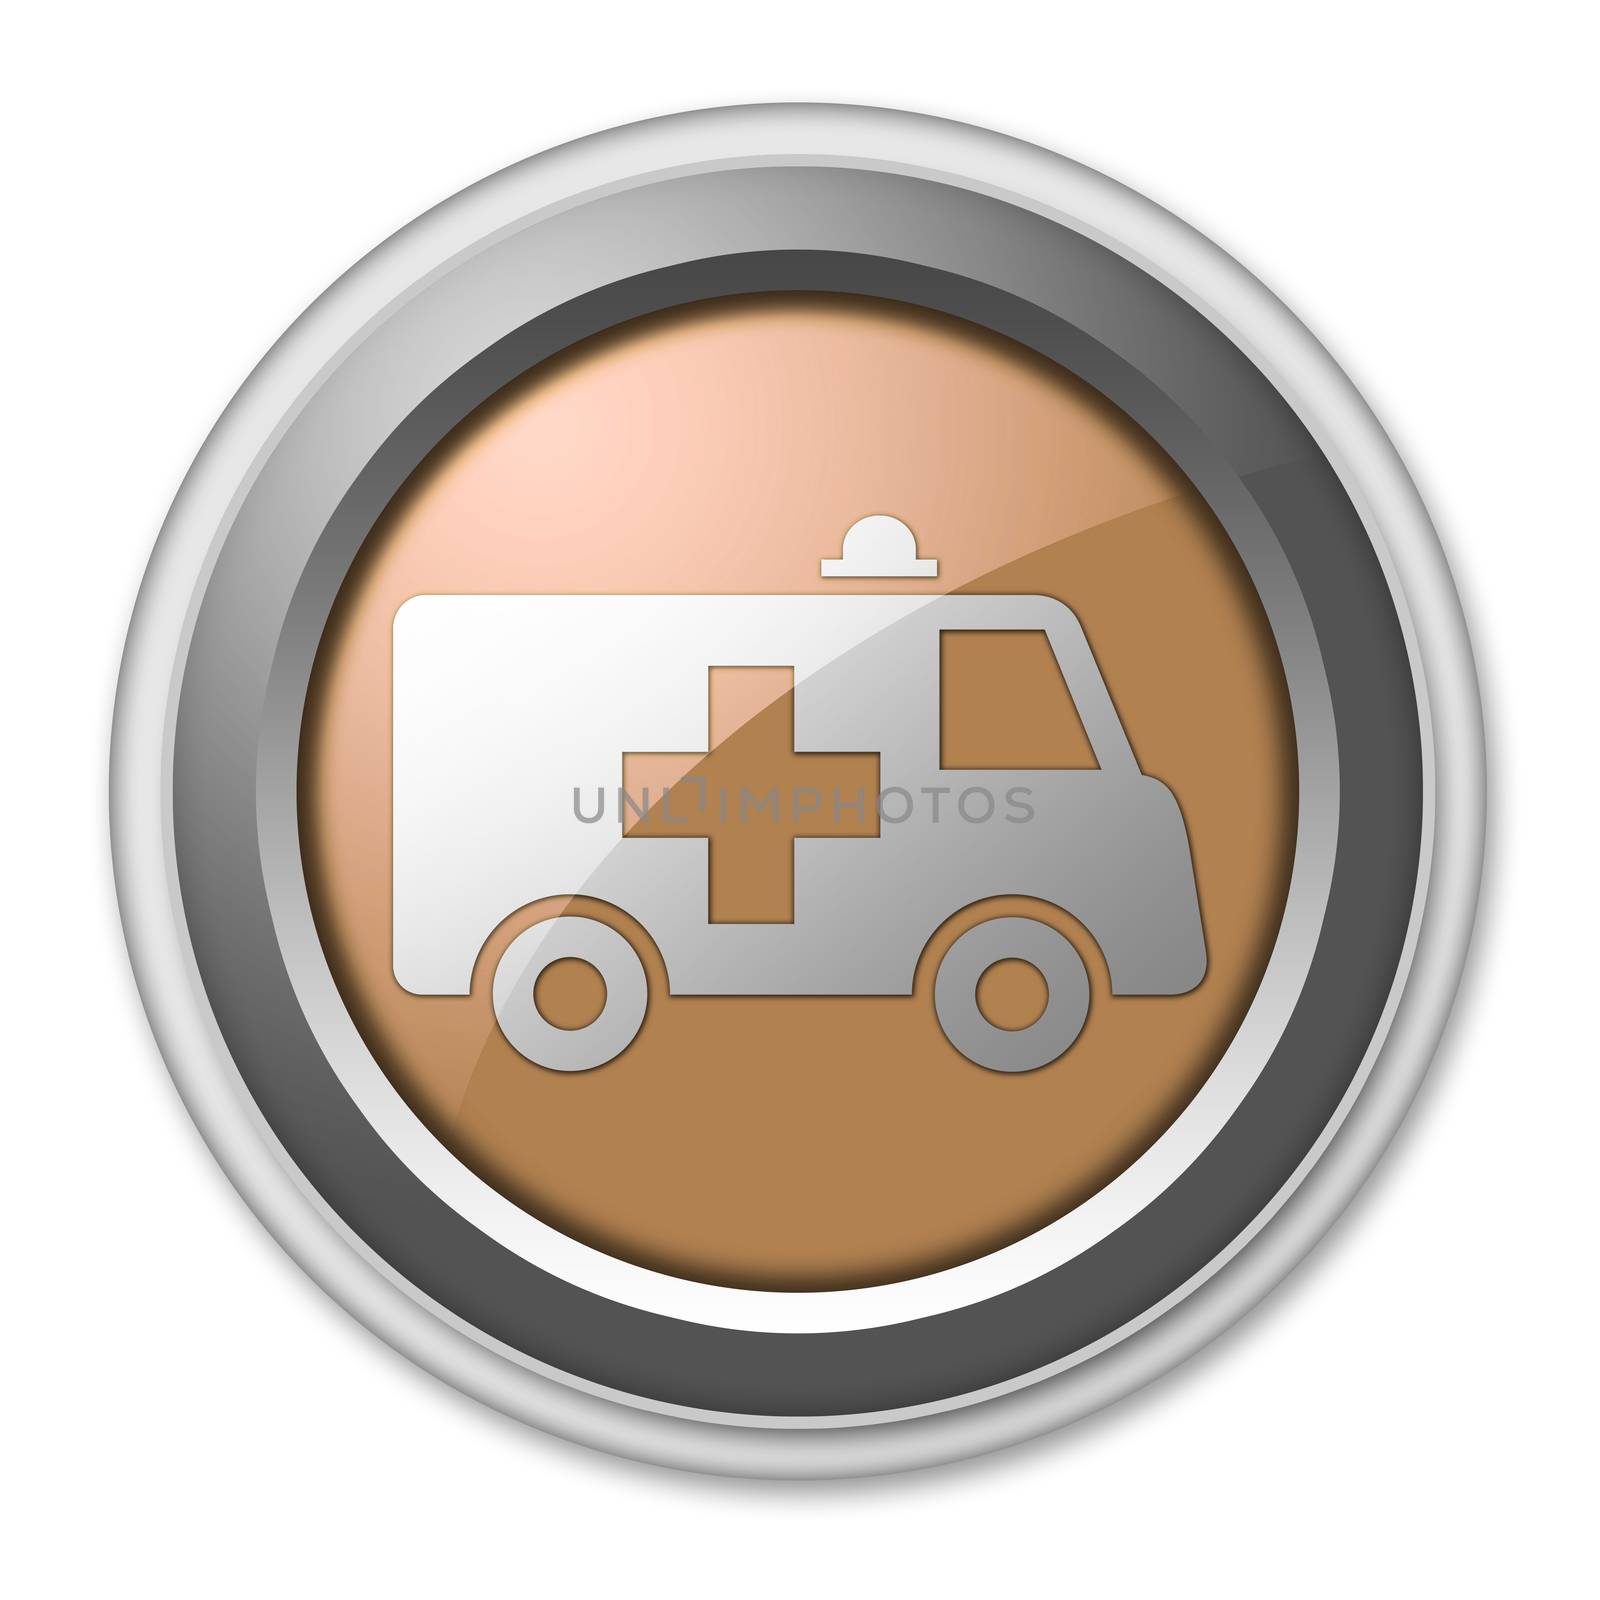 Icon, Button, Pictogram Ambulance by mindscanner